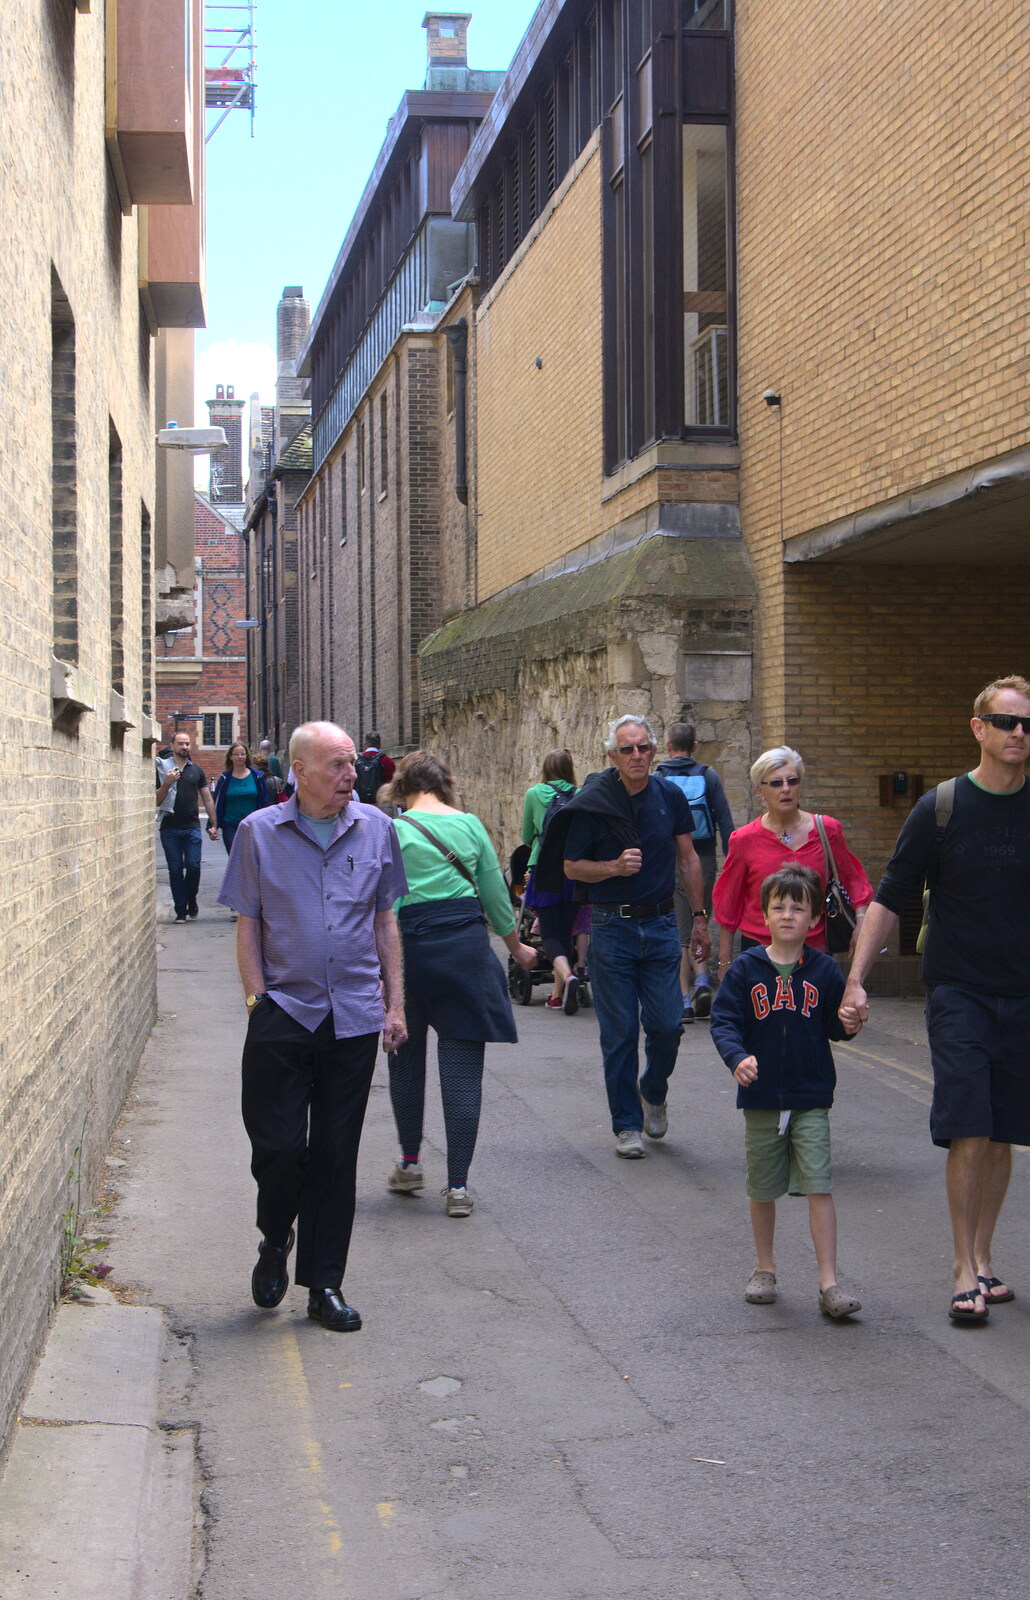 The G-Unit roams around down Garret Hostel Lane from Punting With Grandad, Cambridge, Cambridgeshire - 6th June 2015